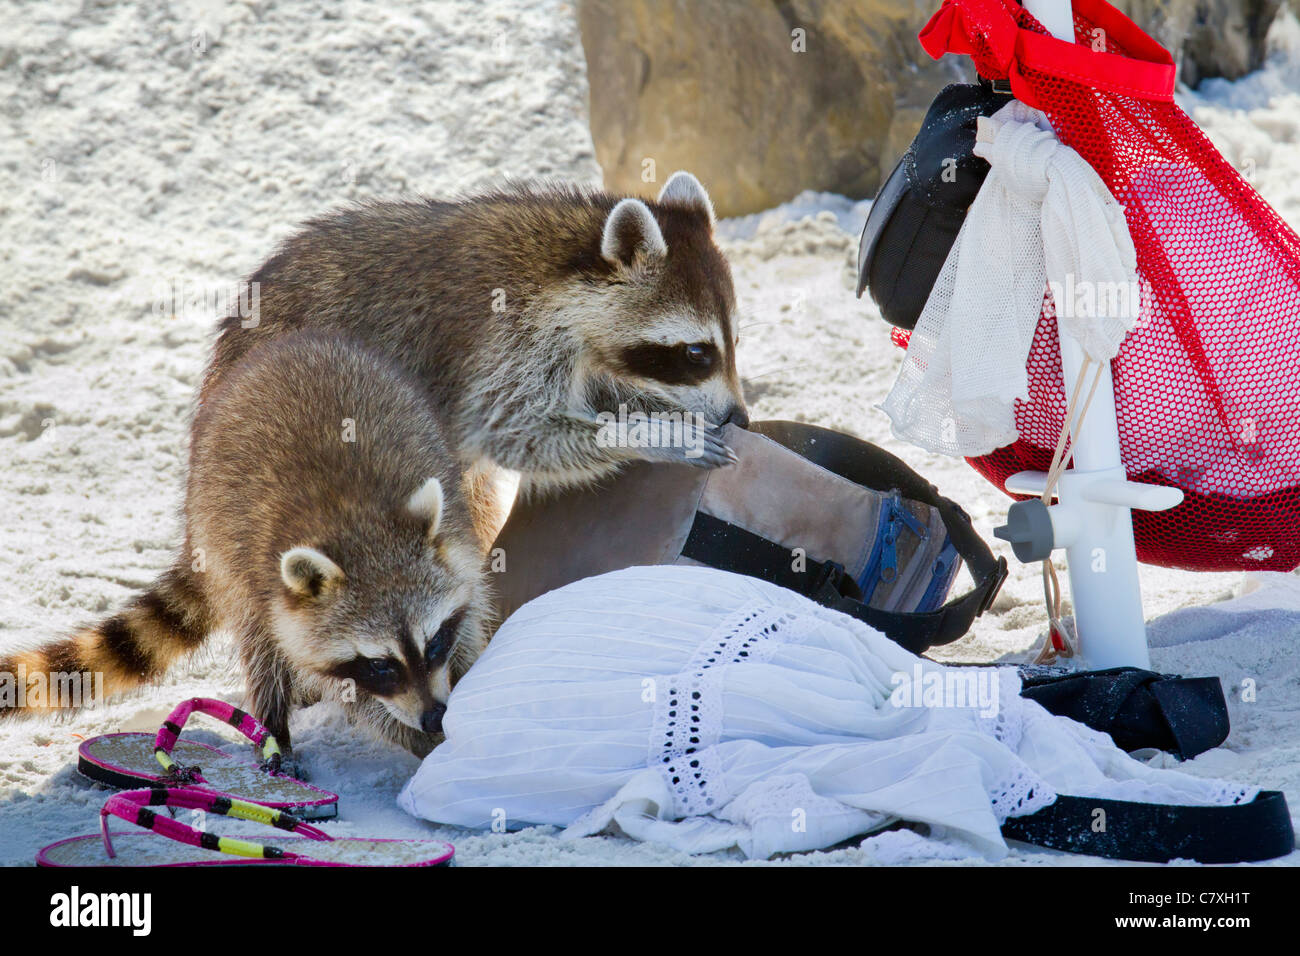 Raccoons (Procyon lotor) scavenging at a Florida beach. Stock Photo